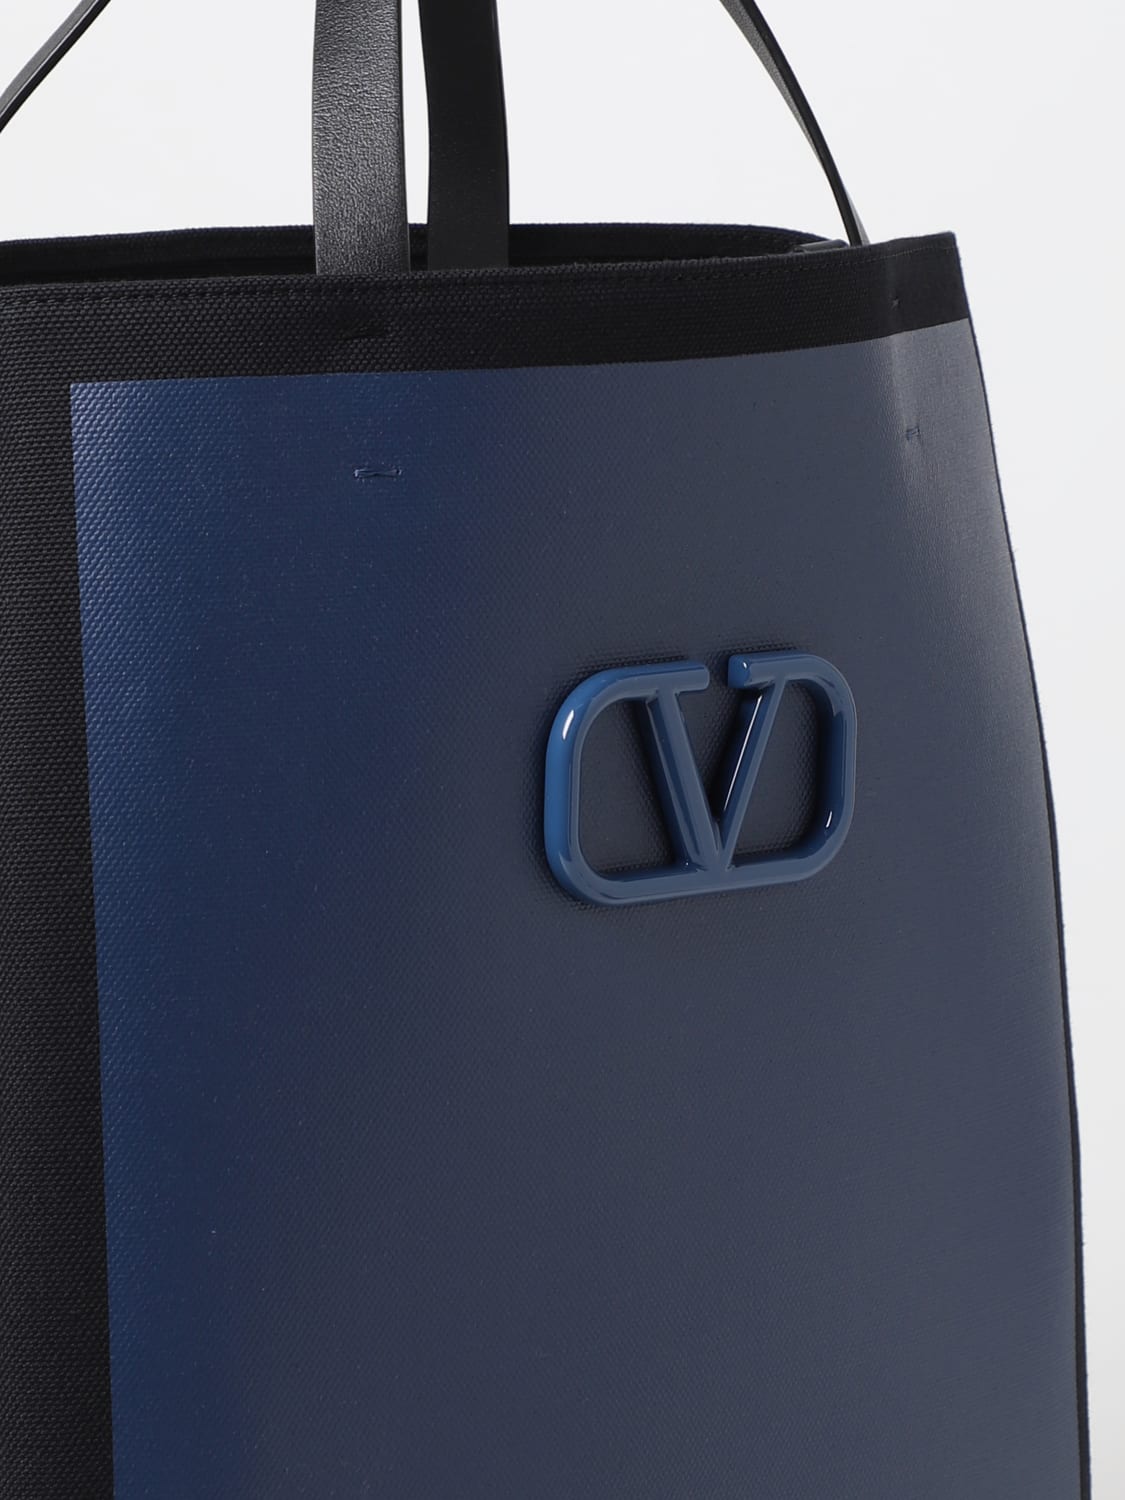 Valentino Garavani Vlogo Signature Calfskin Tote Bag in Black for